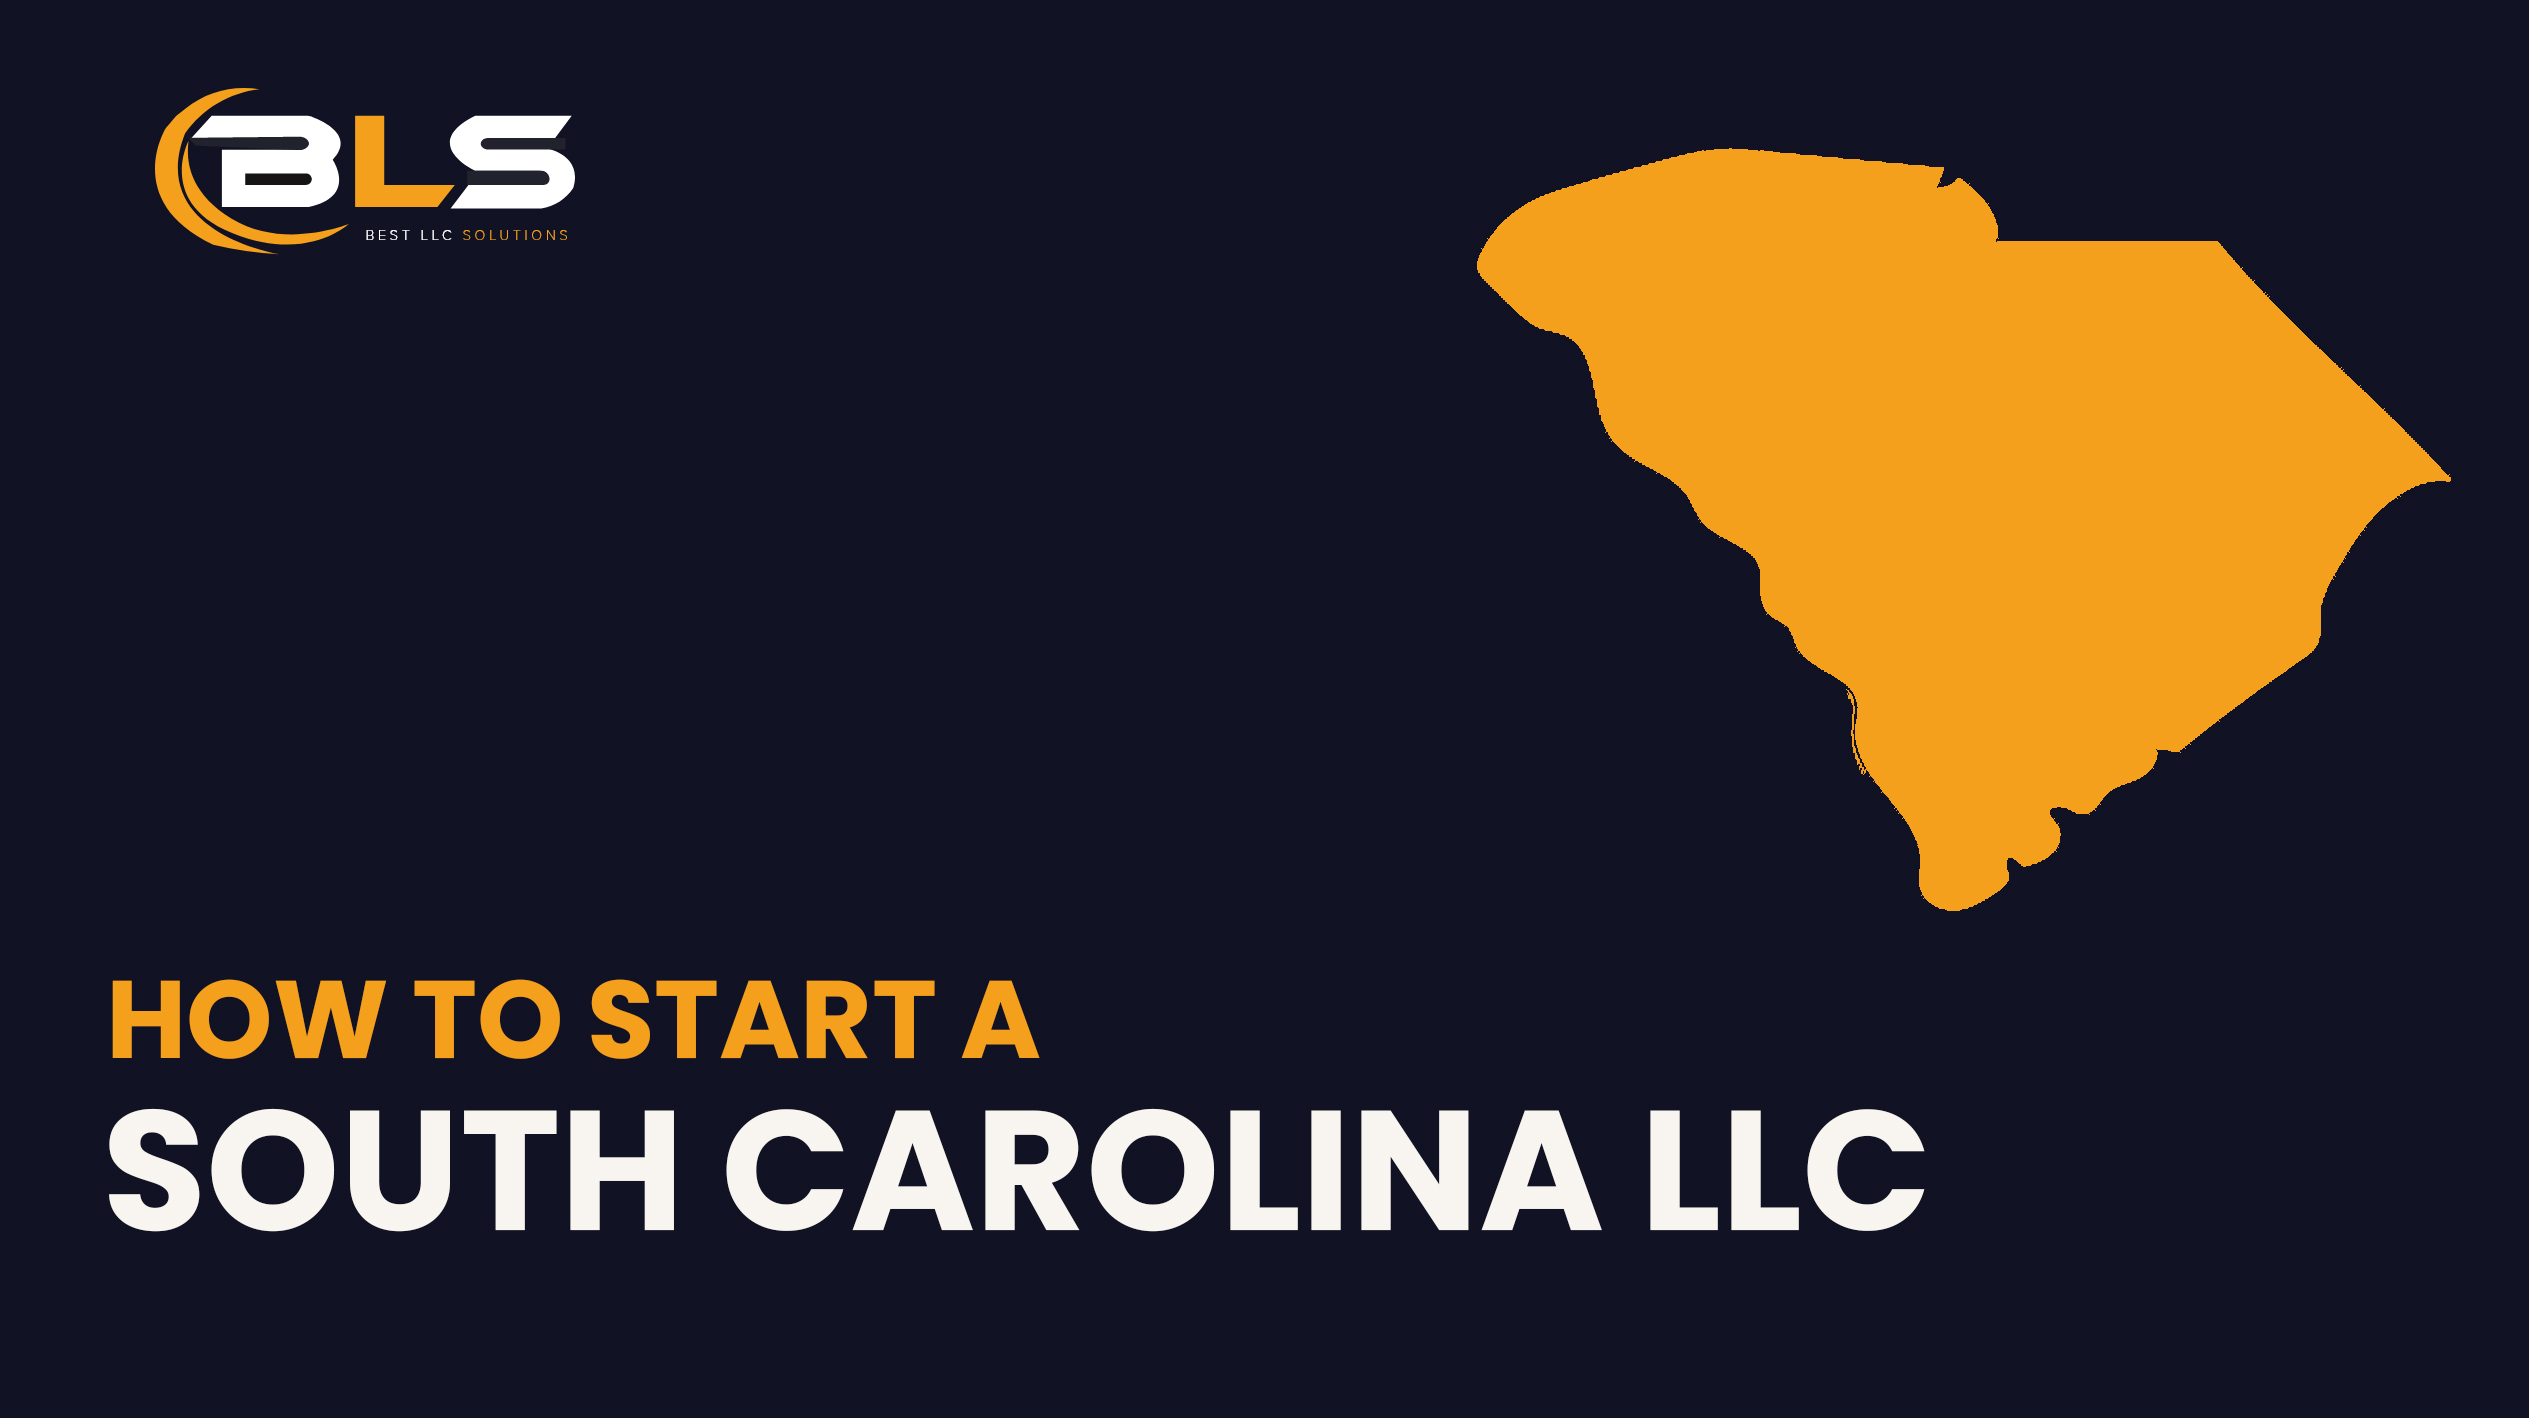 South Carolina LLC